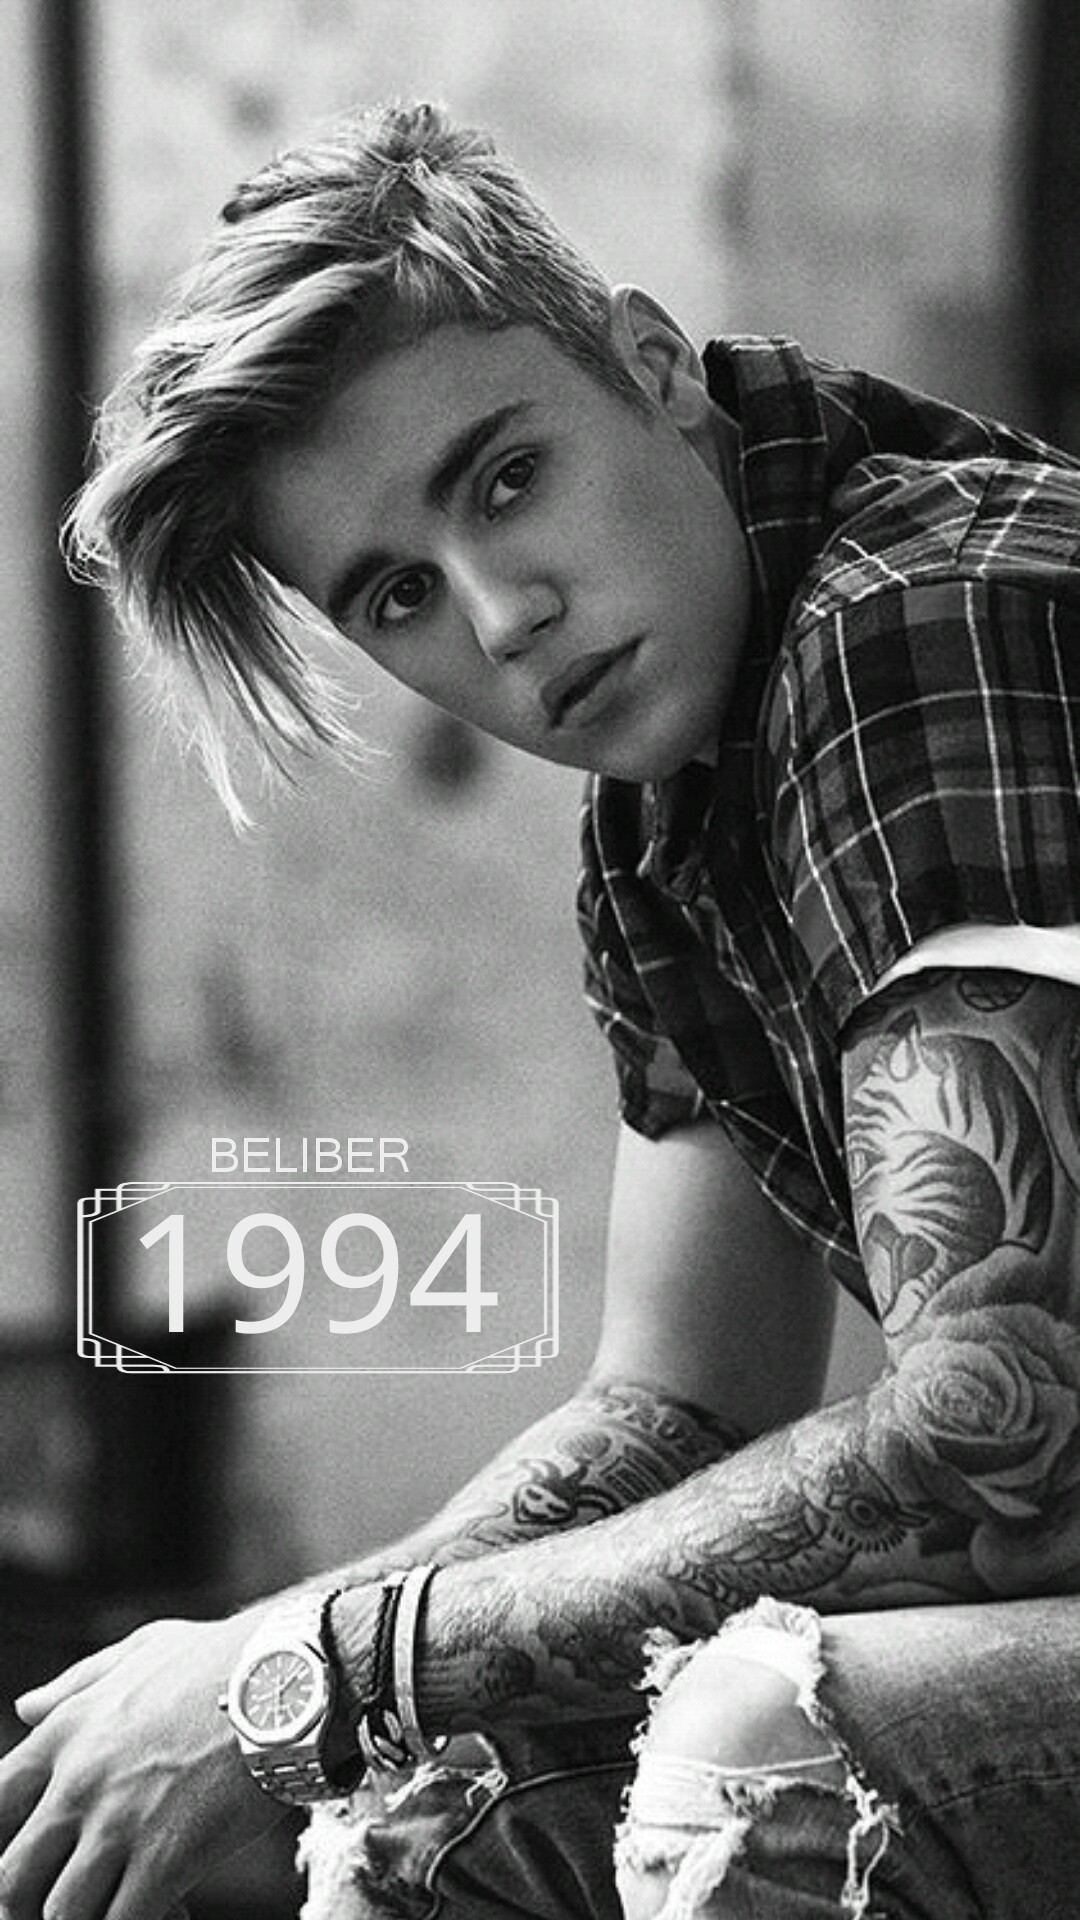 Justin Bieber Wallpaper 4K, Neon, Canadian singer